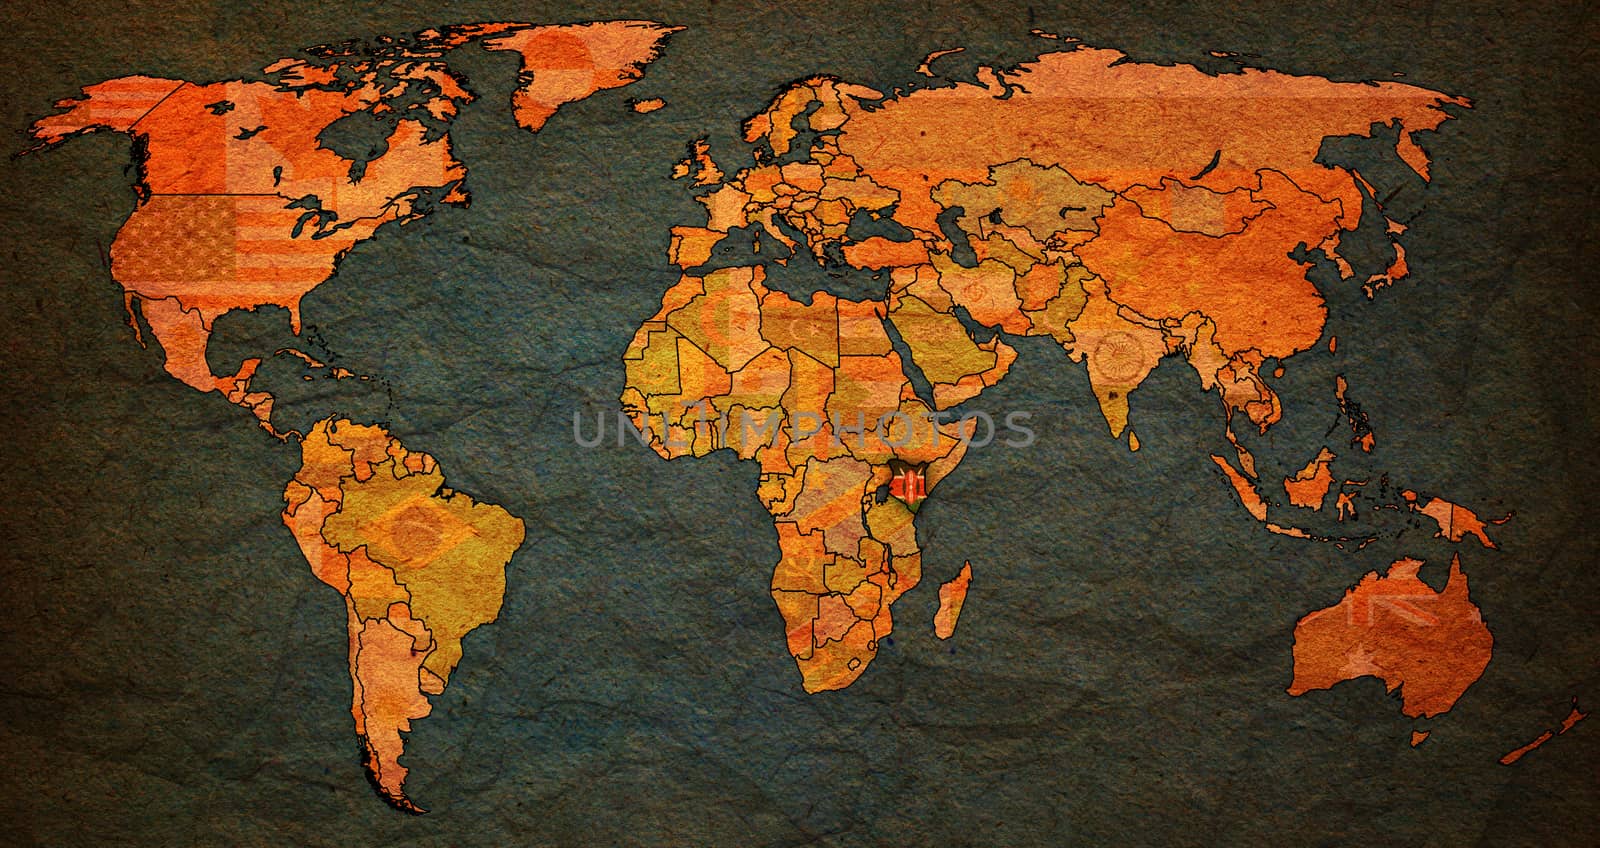 kenya flag on old vintage world map with national borders